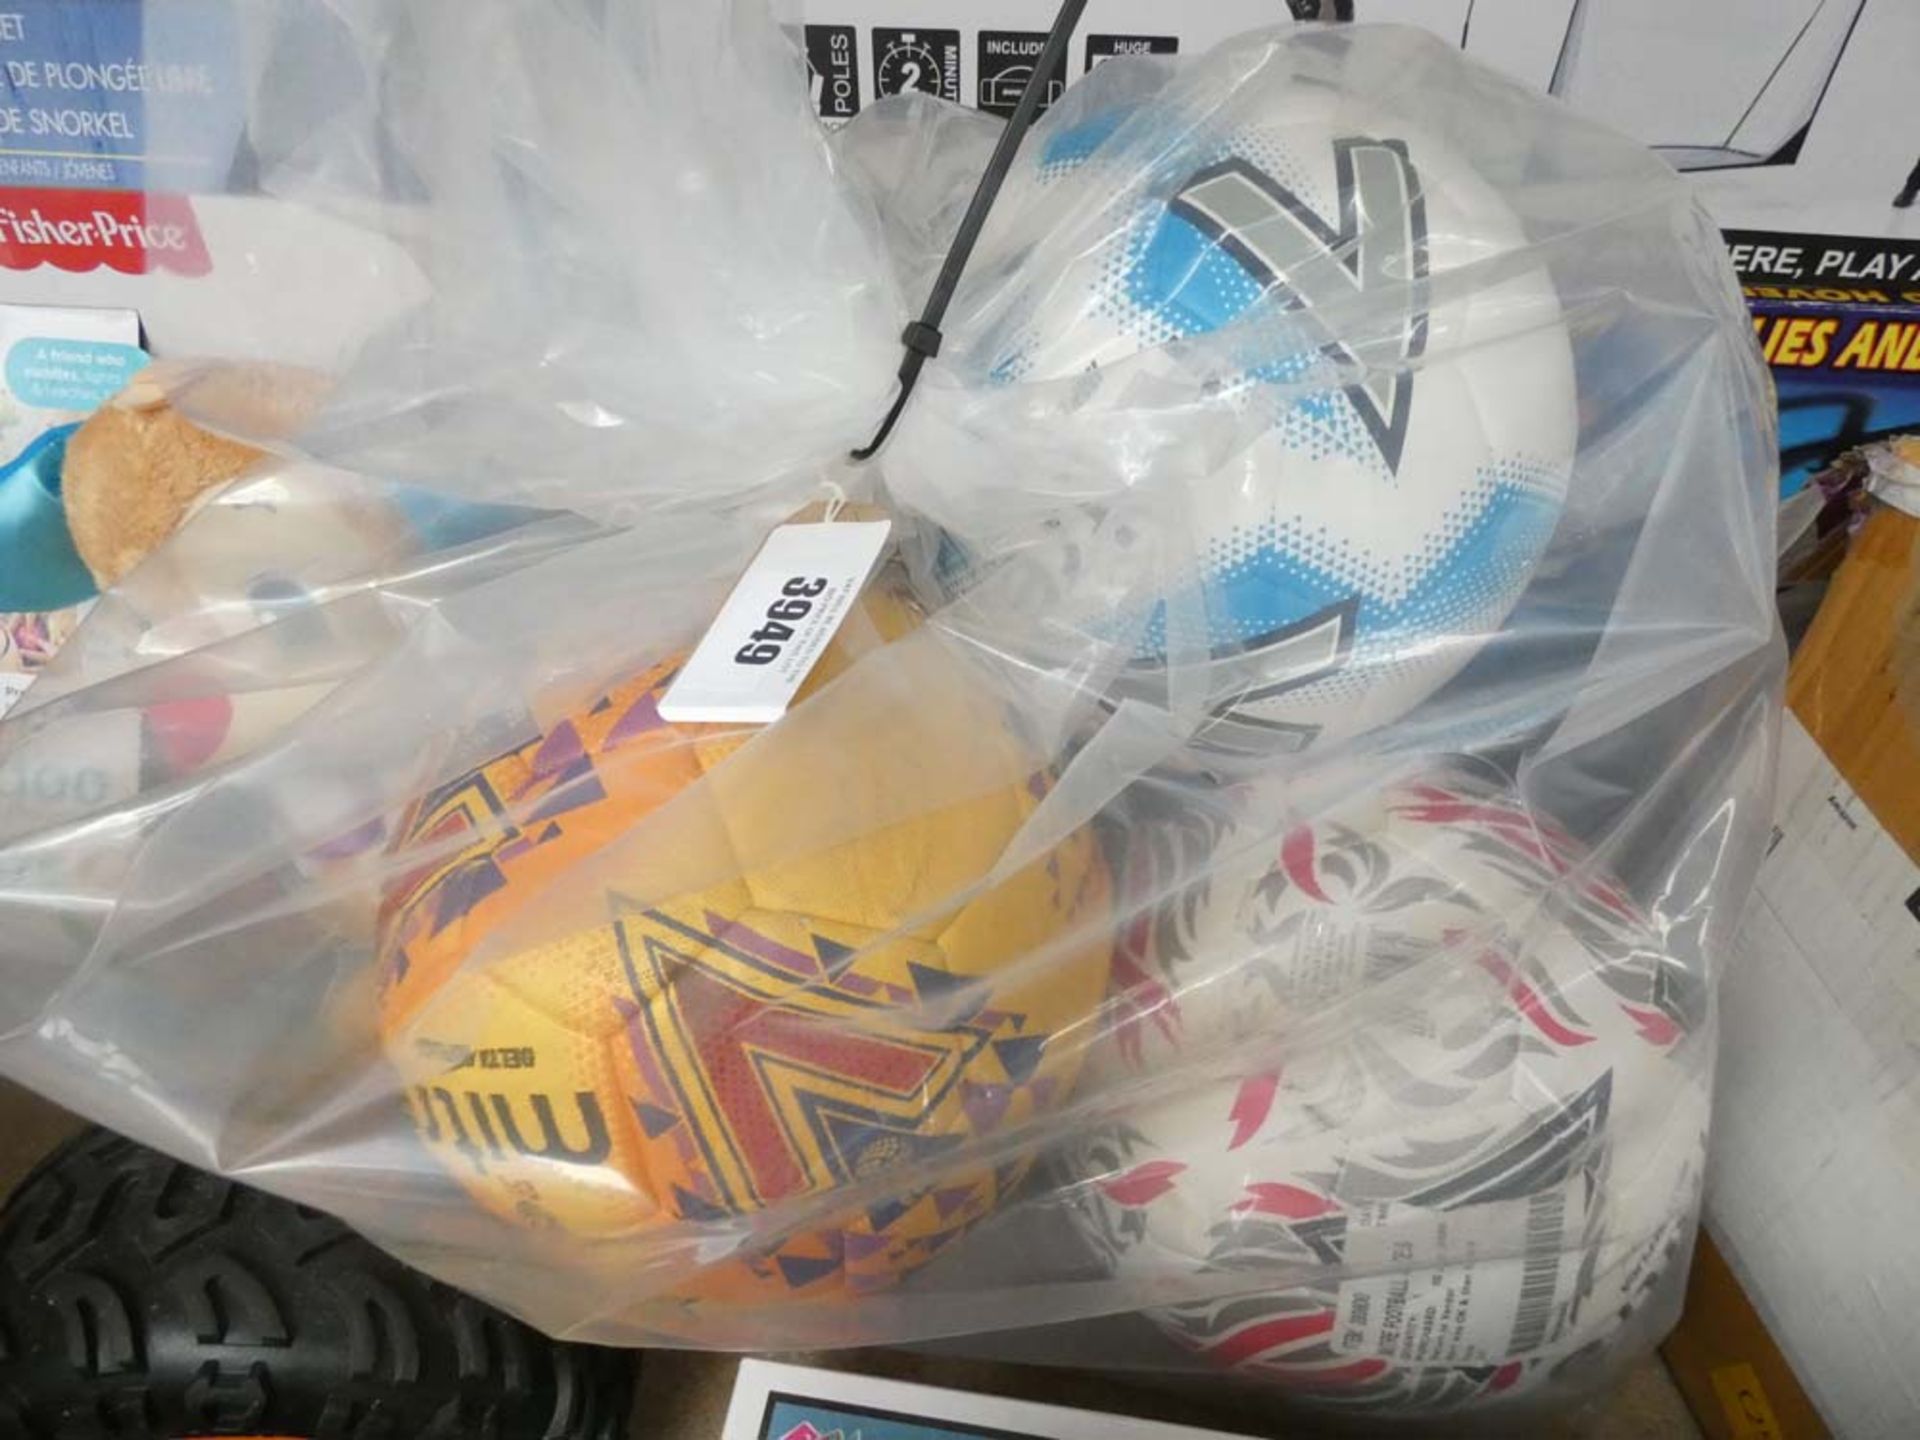 Bag containing 4 Mitre footballs